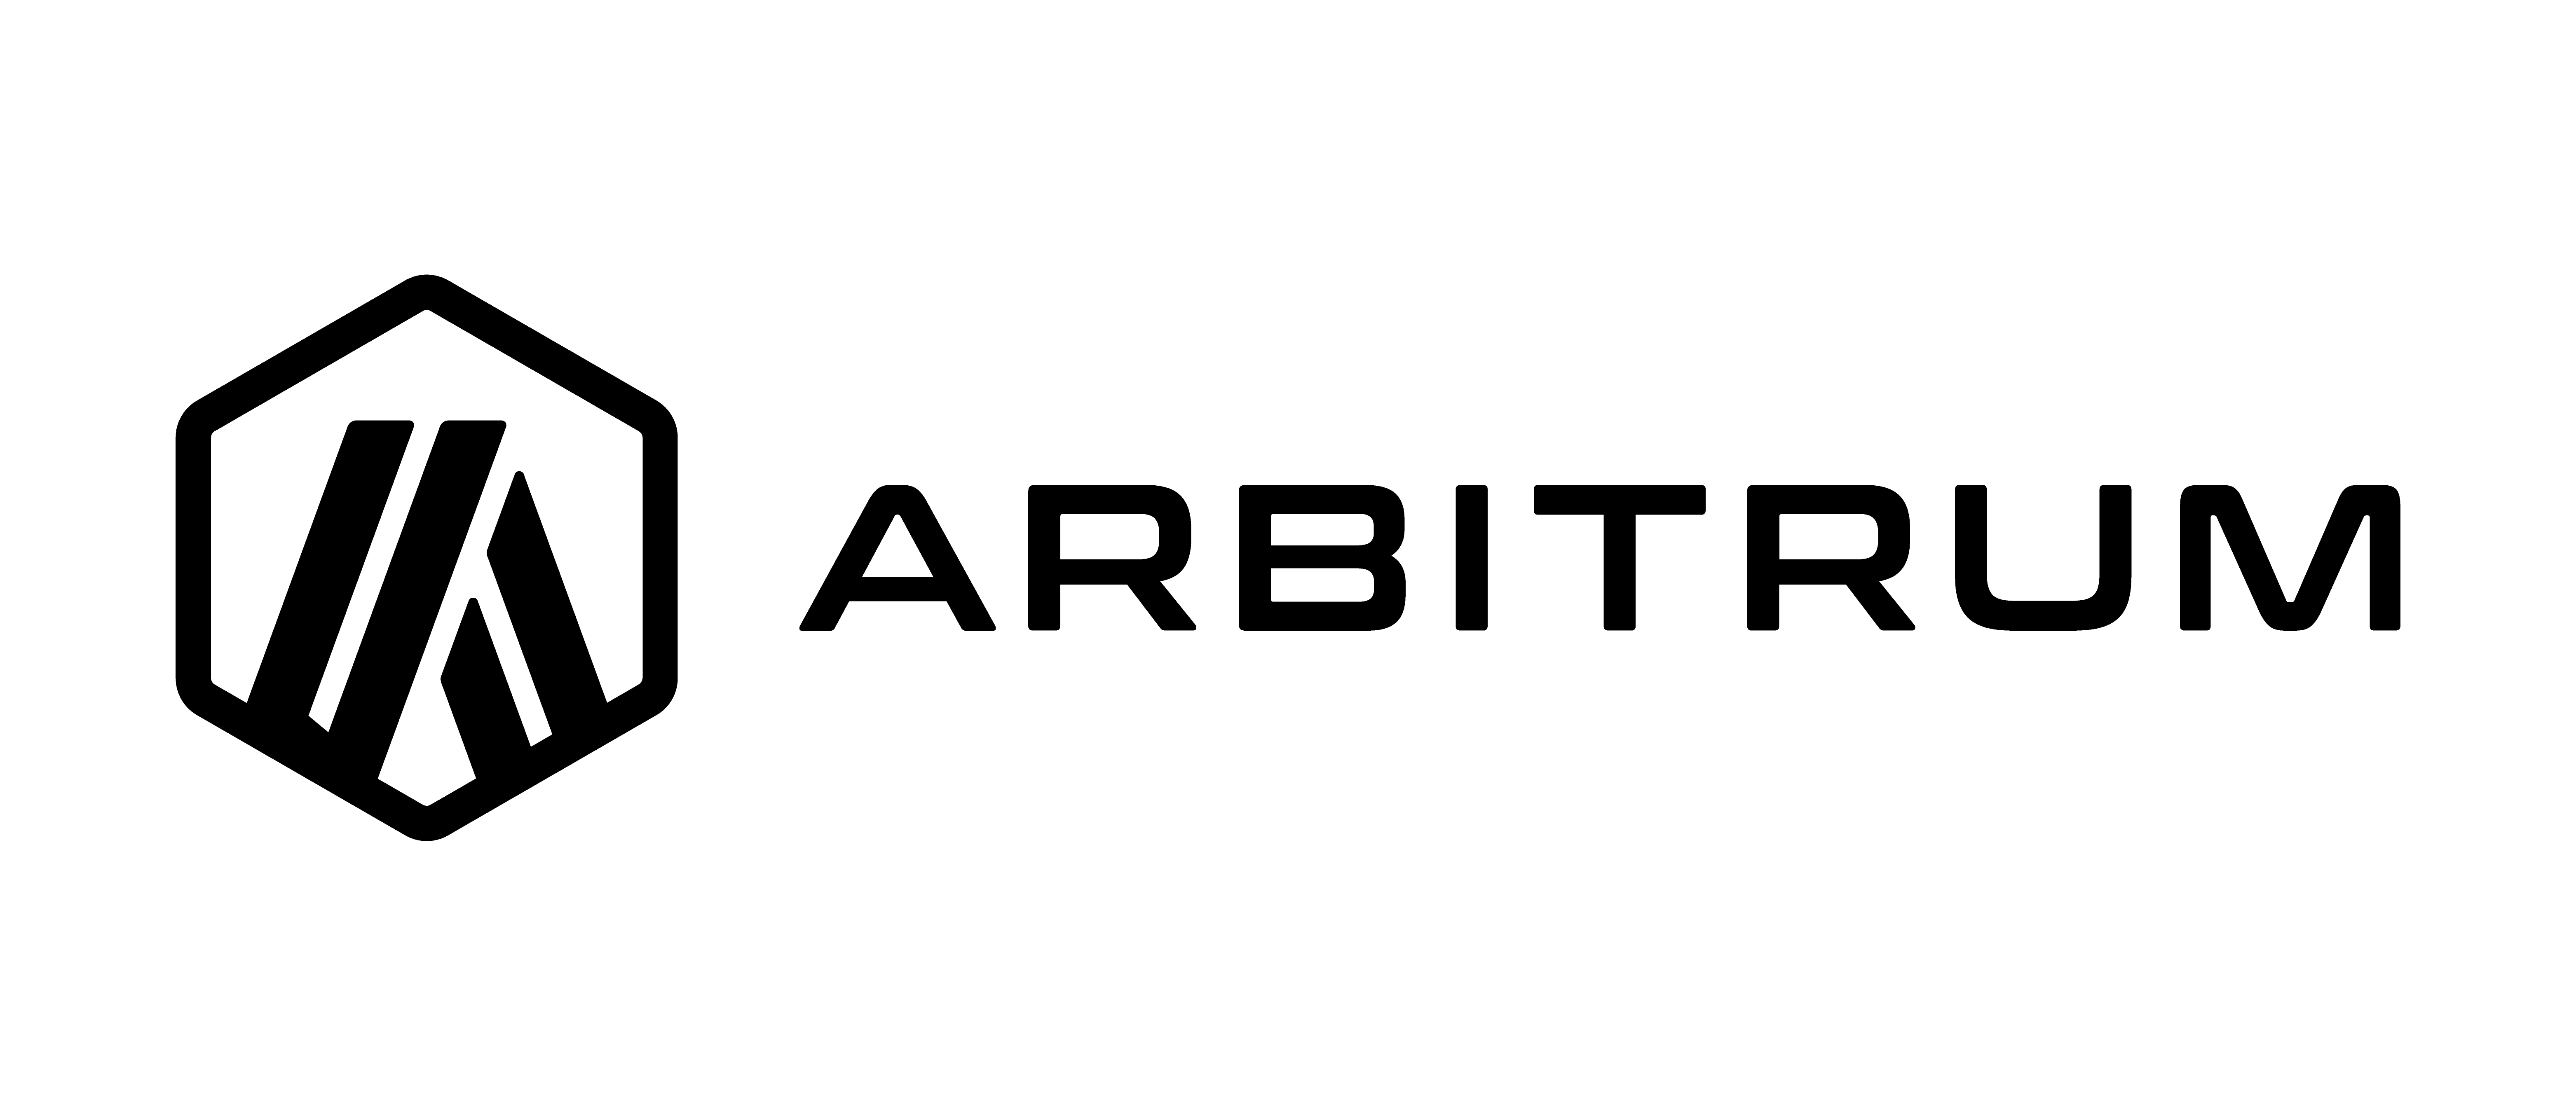 Arbitrum Network Logo